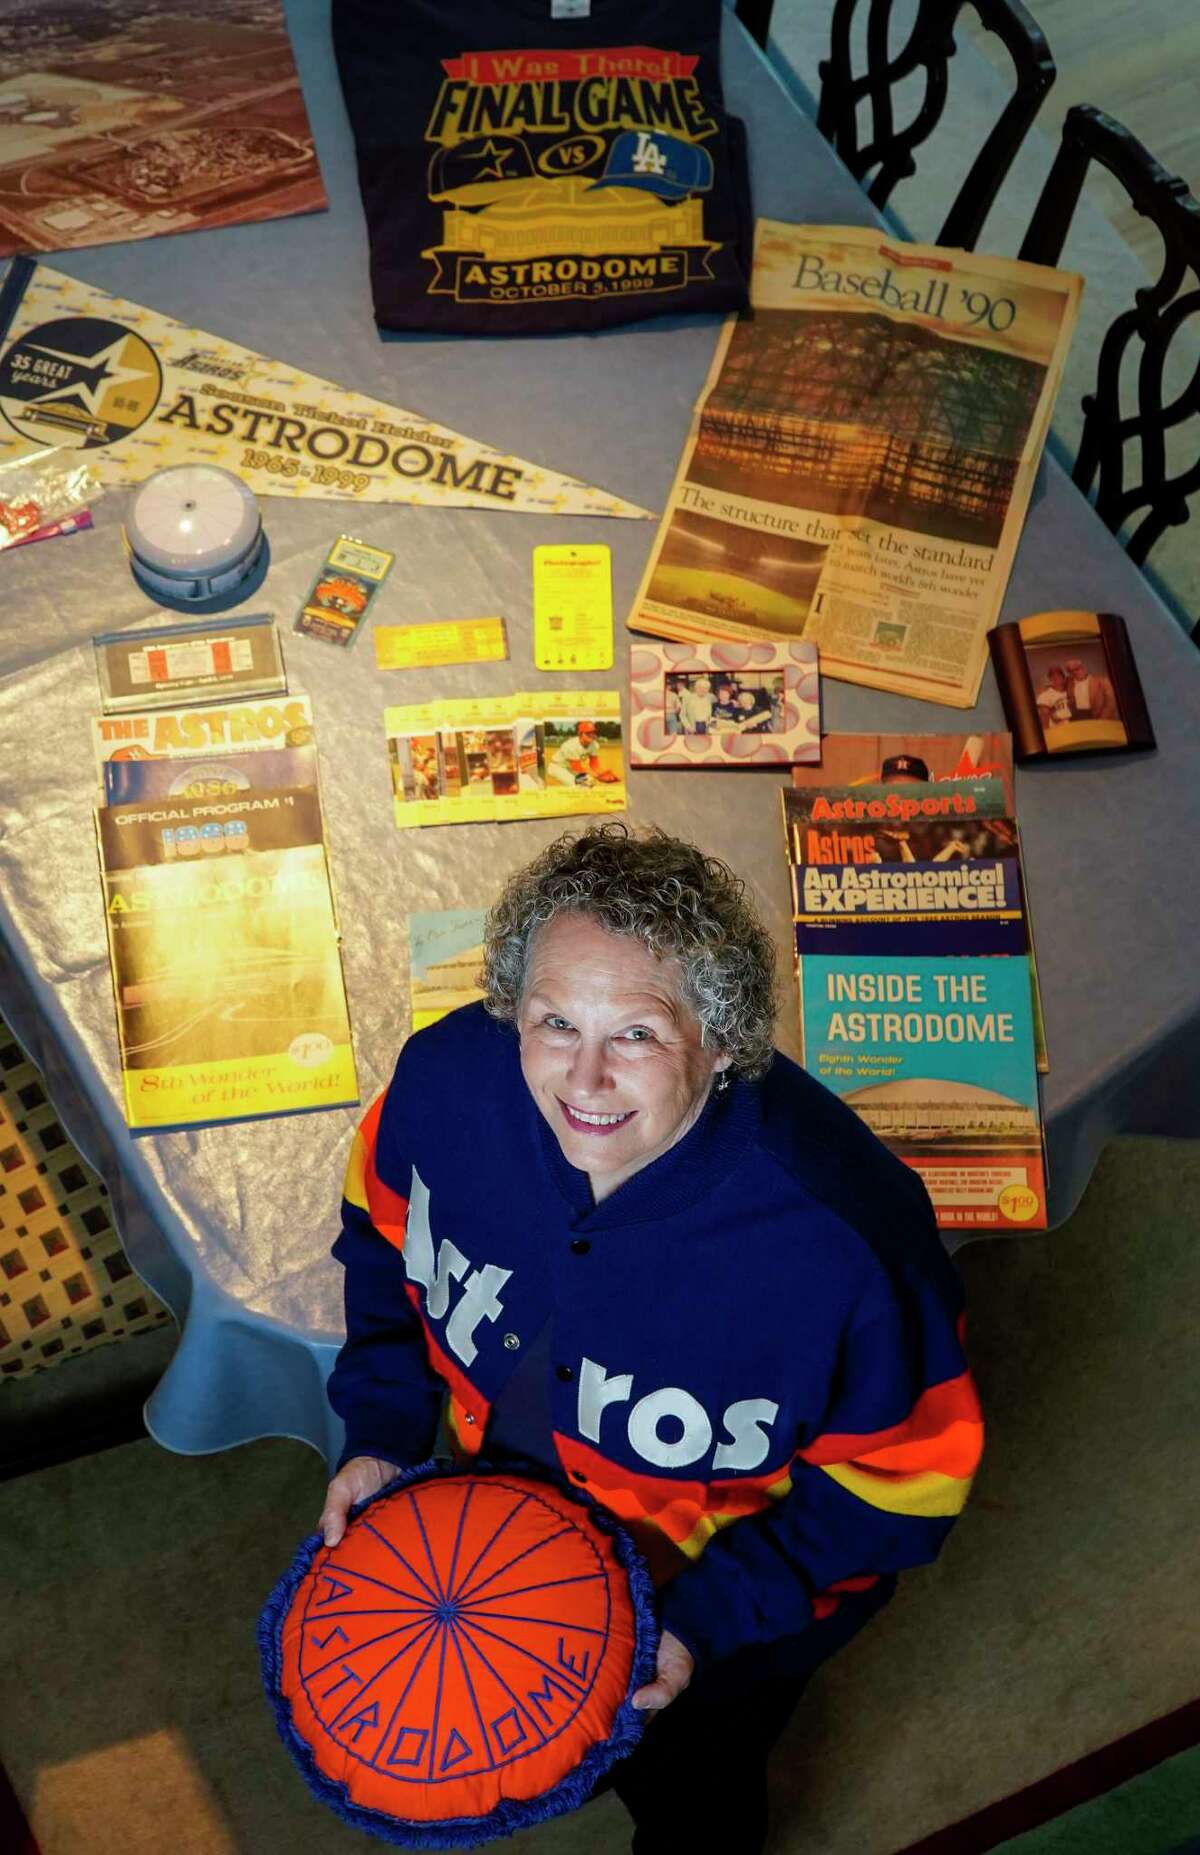 Houston Astros: A family's baseball story since 1965